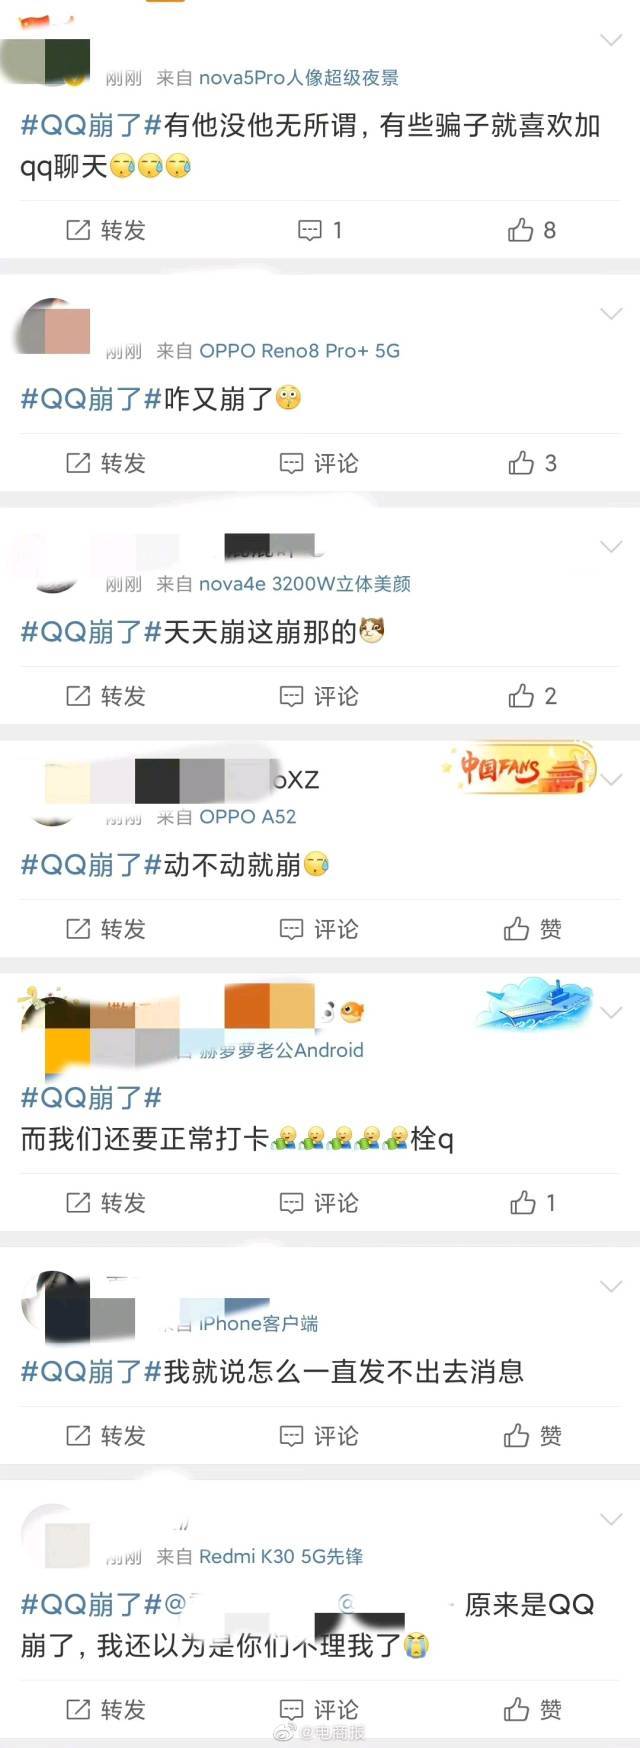 “QQ崩了”上热搜,网友:最近是排队故障吗?